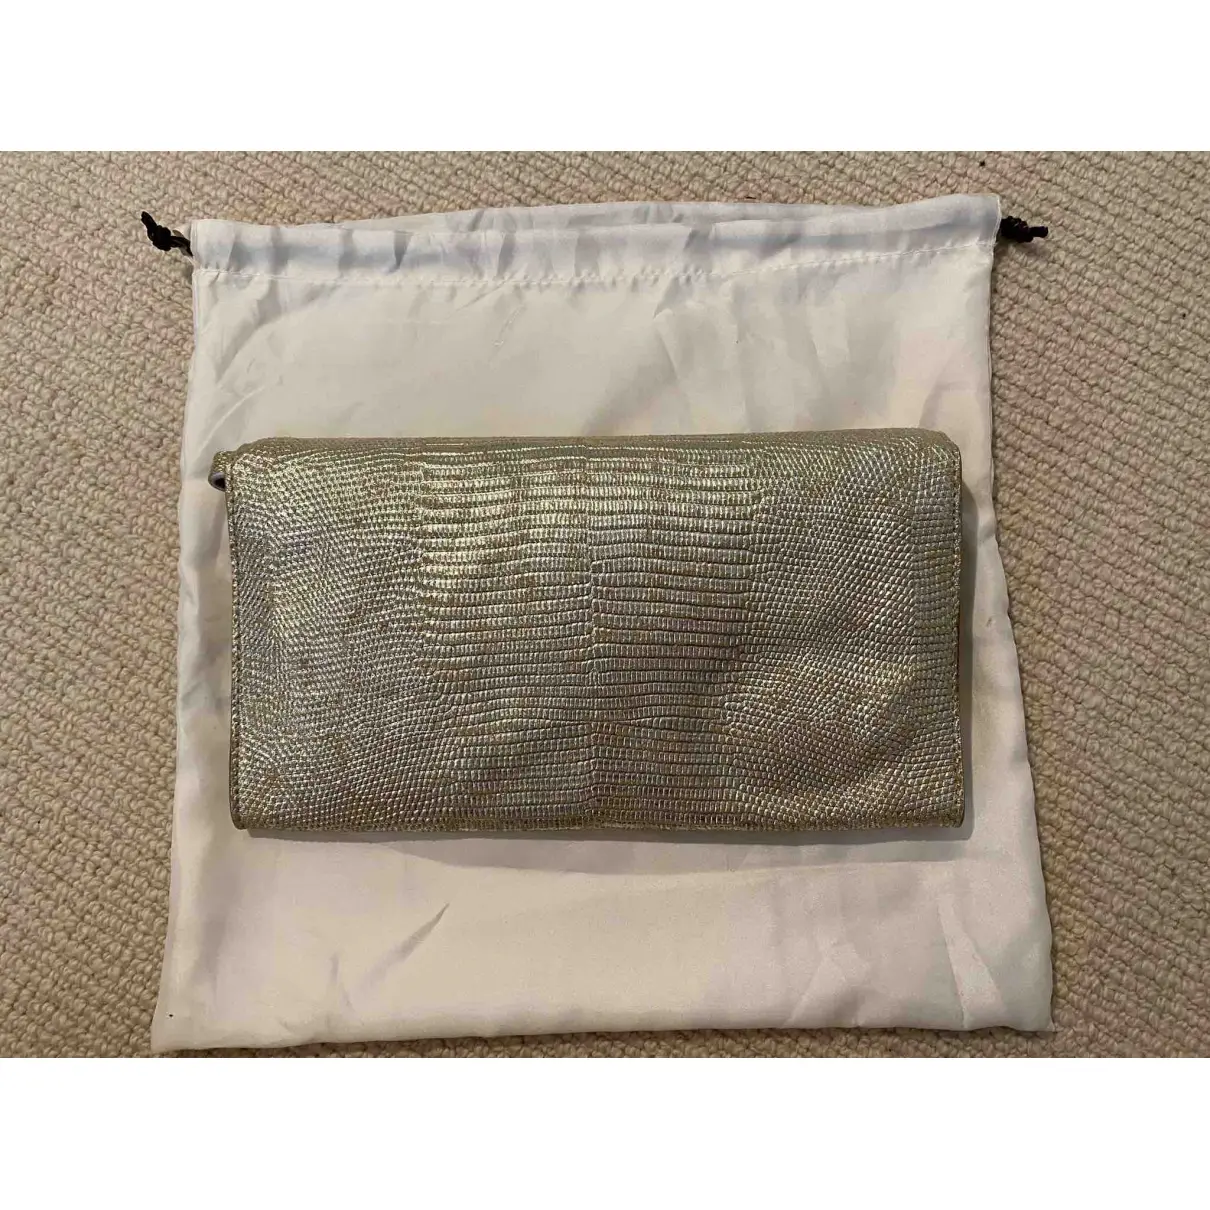 Buy Michael Kors Leather clutch bag online